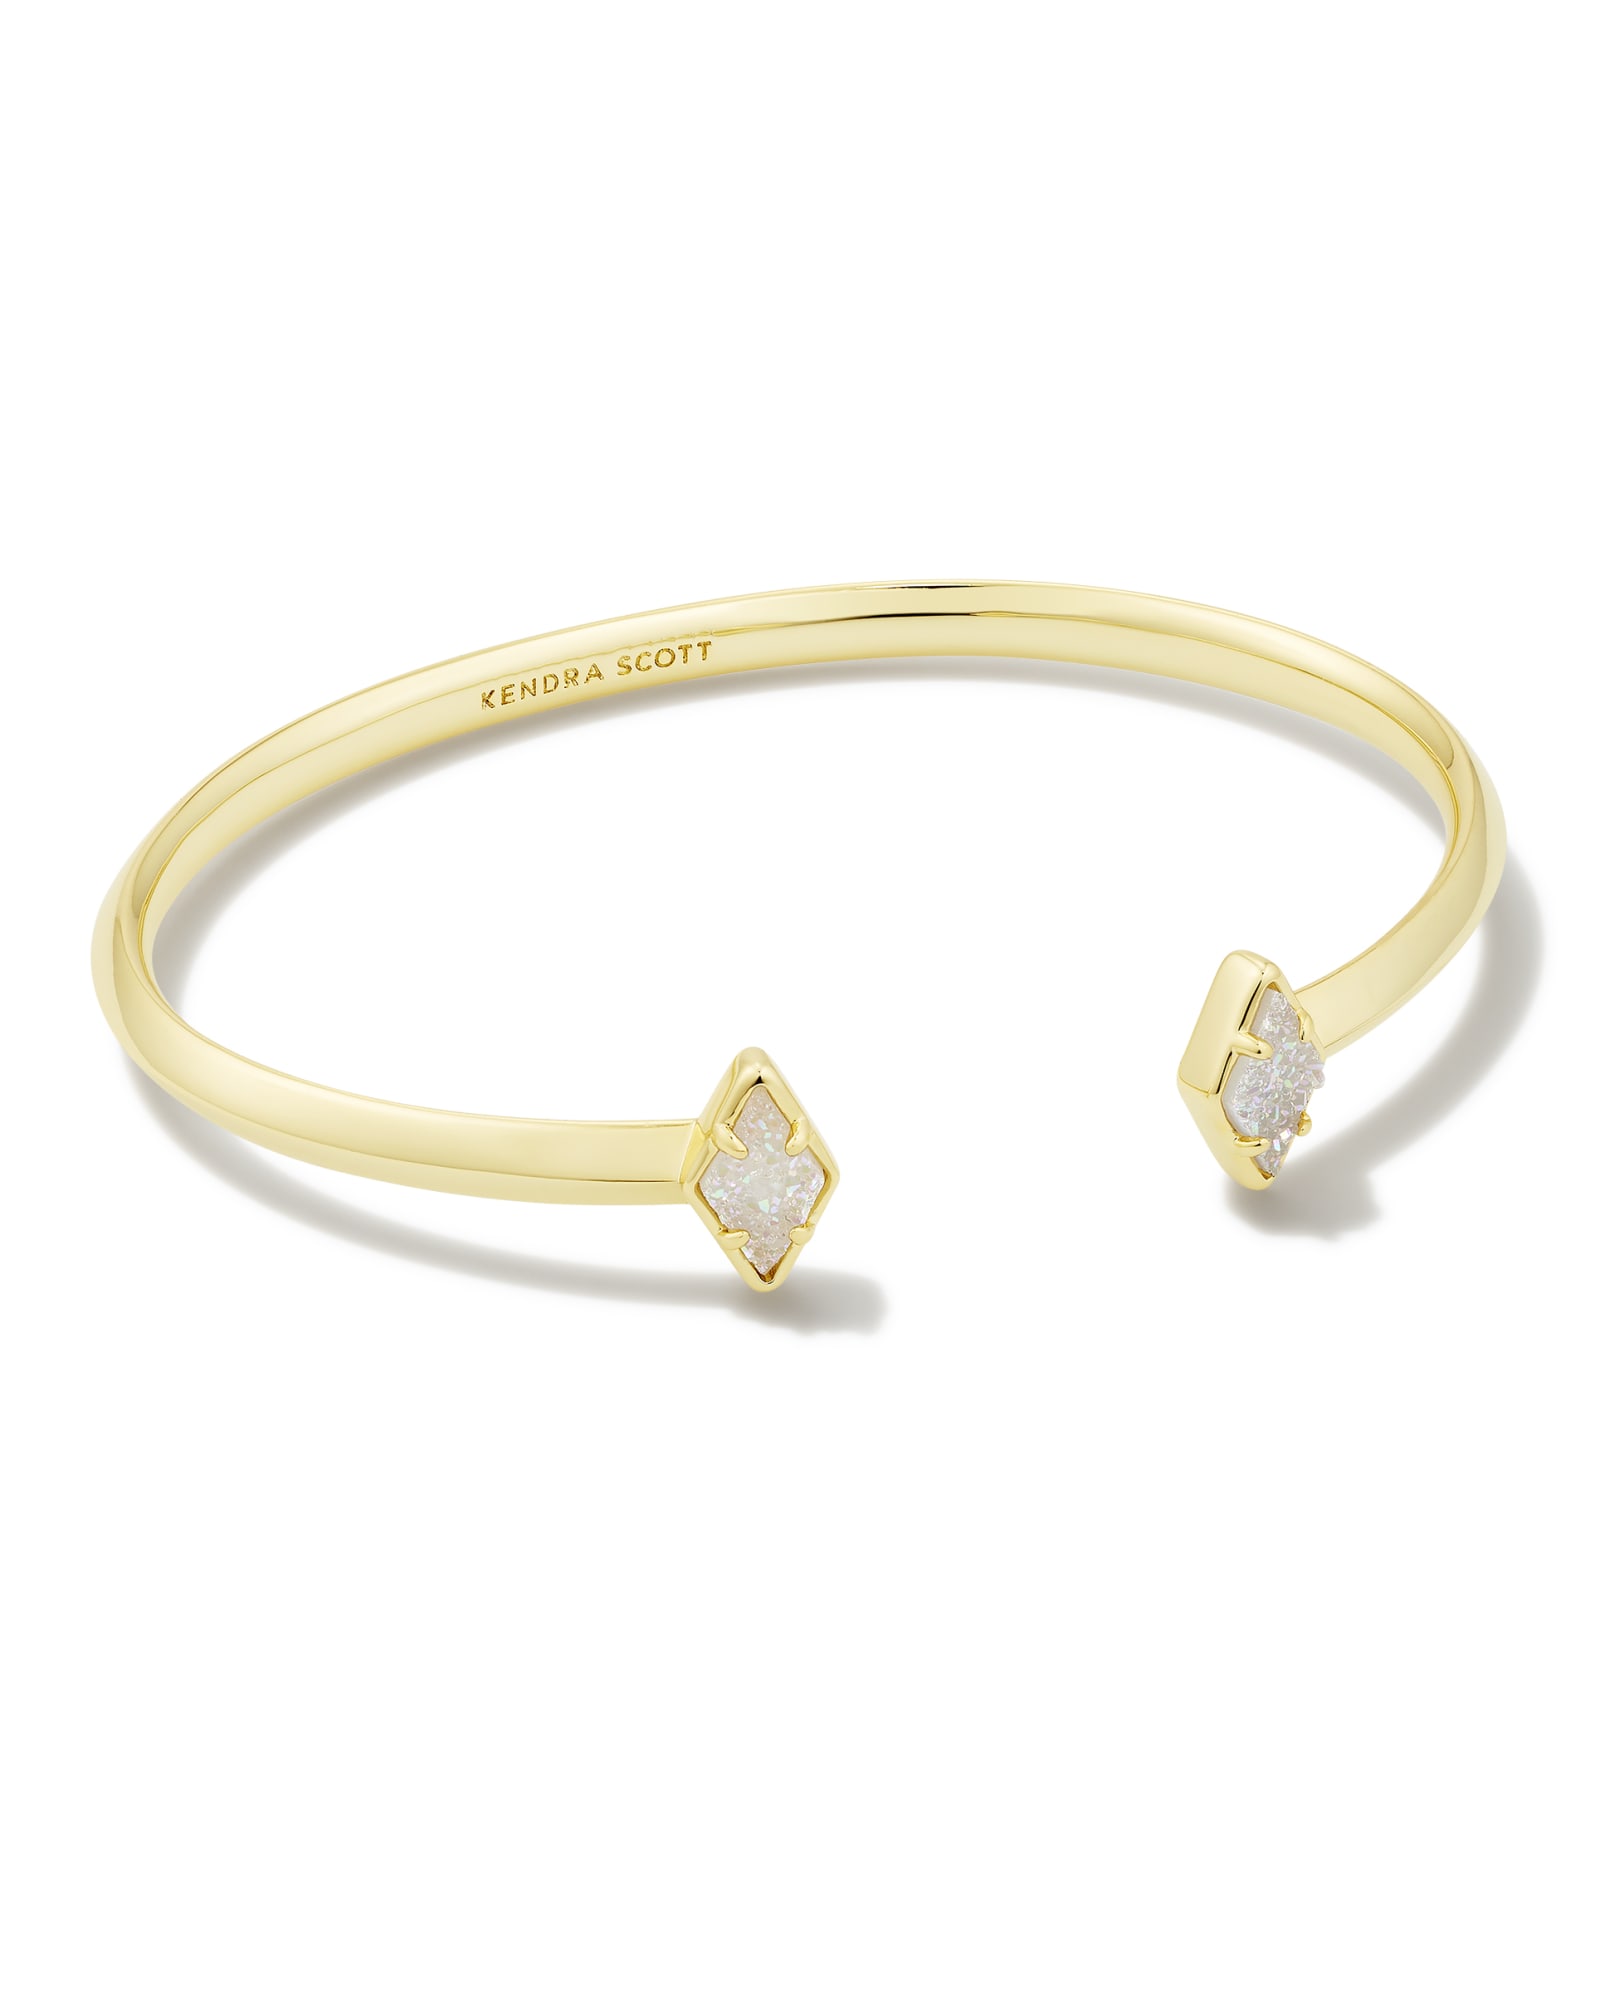 Kinsley Gold Cuff Bracelet in Iridescent Drusy | Kendra Scott | Kendra Scott